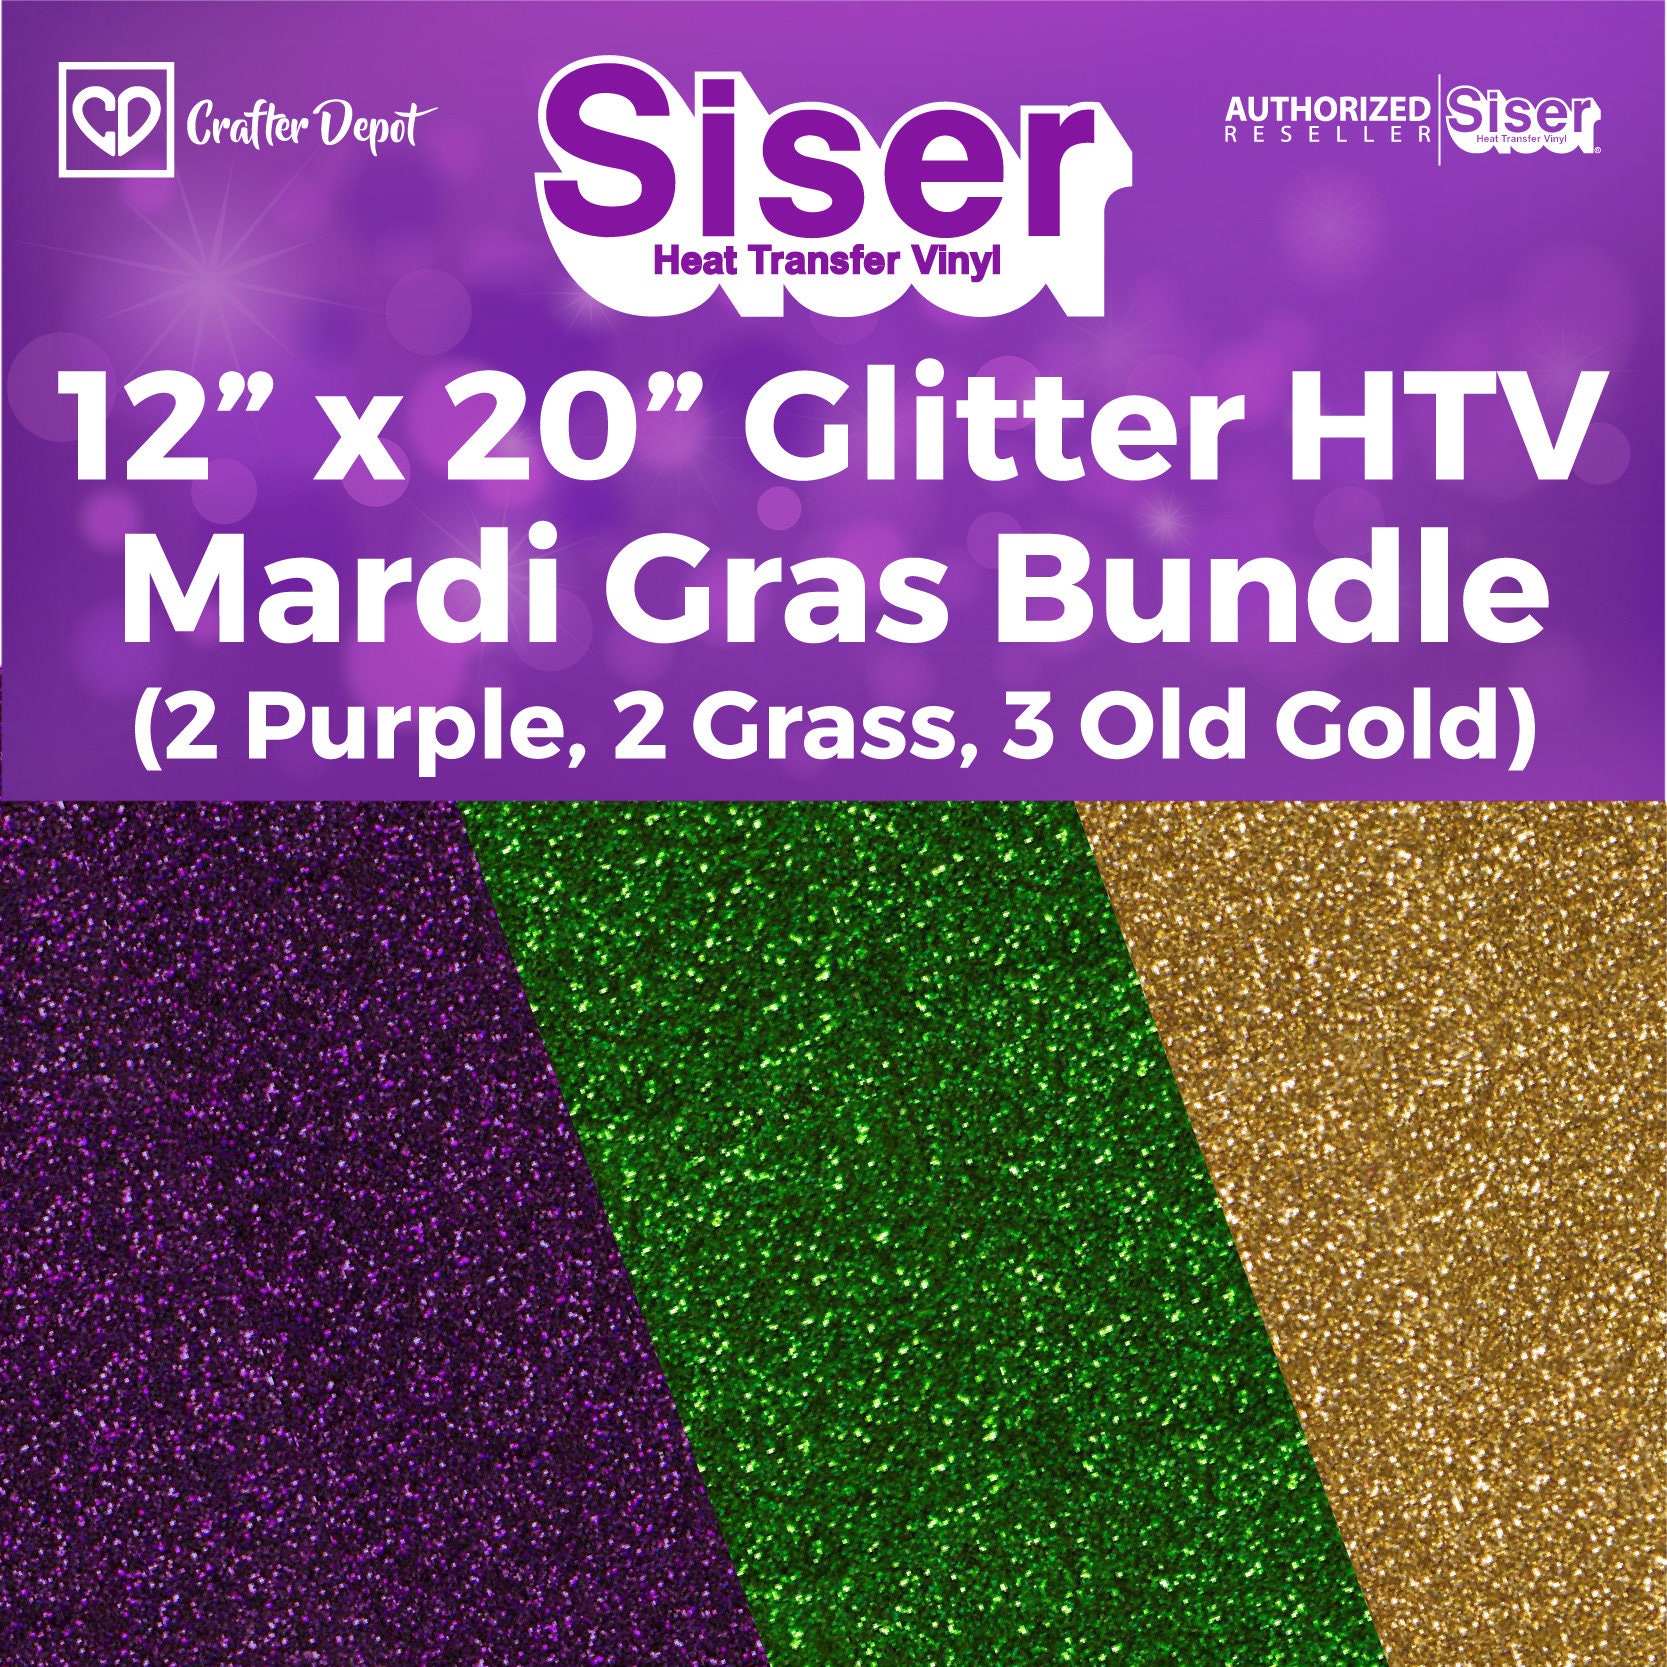 Siser Glitter HTV Mardi Gras Bundle Heat Transfer Vinyl, HTV Vinyl, Glitter  Vinyl, 2 Purple Sheets, 2 Grass Sheets, 3 Old Gold Sheets 